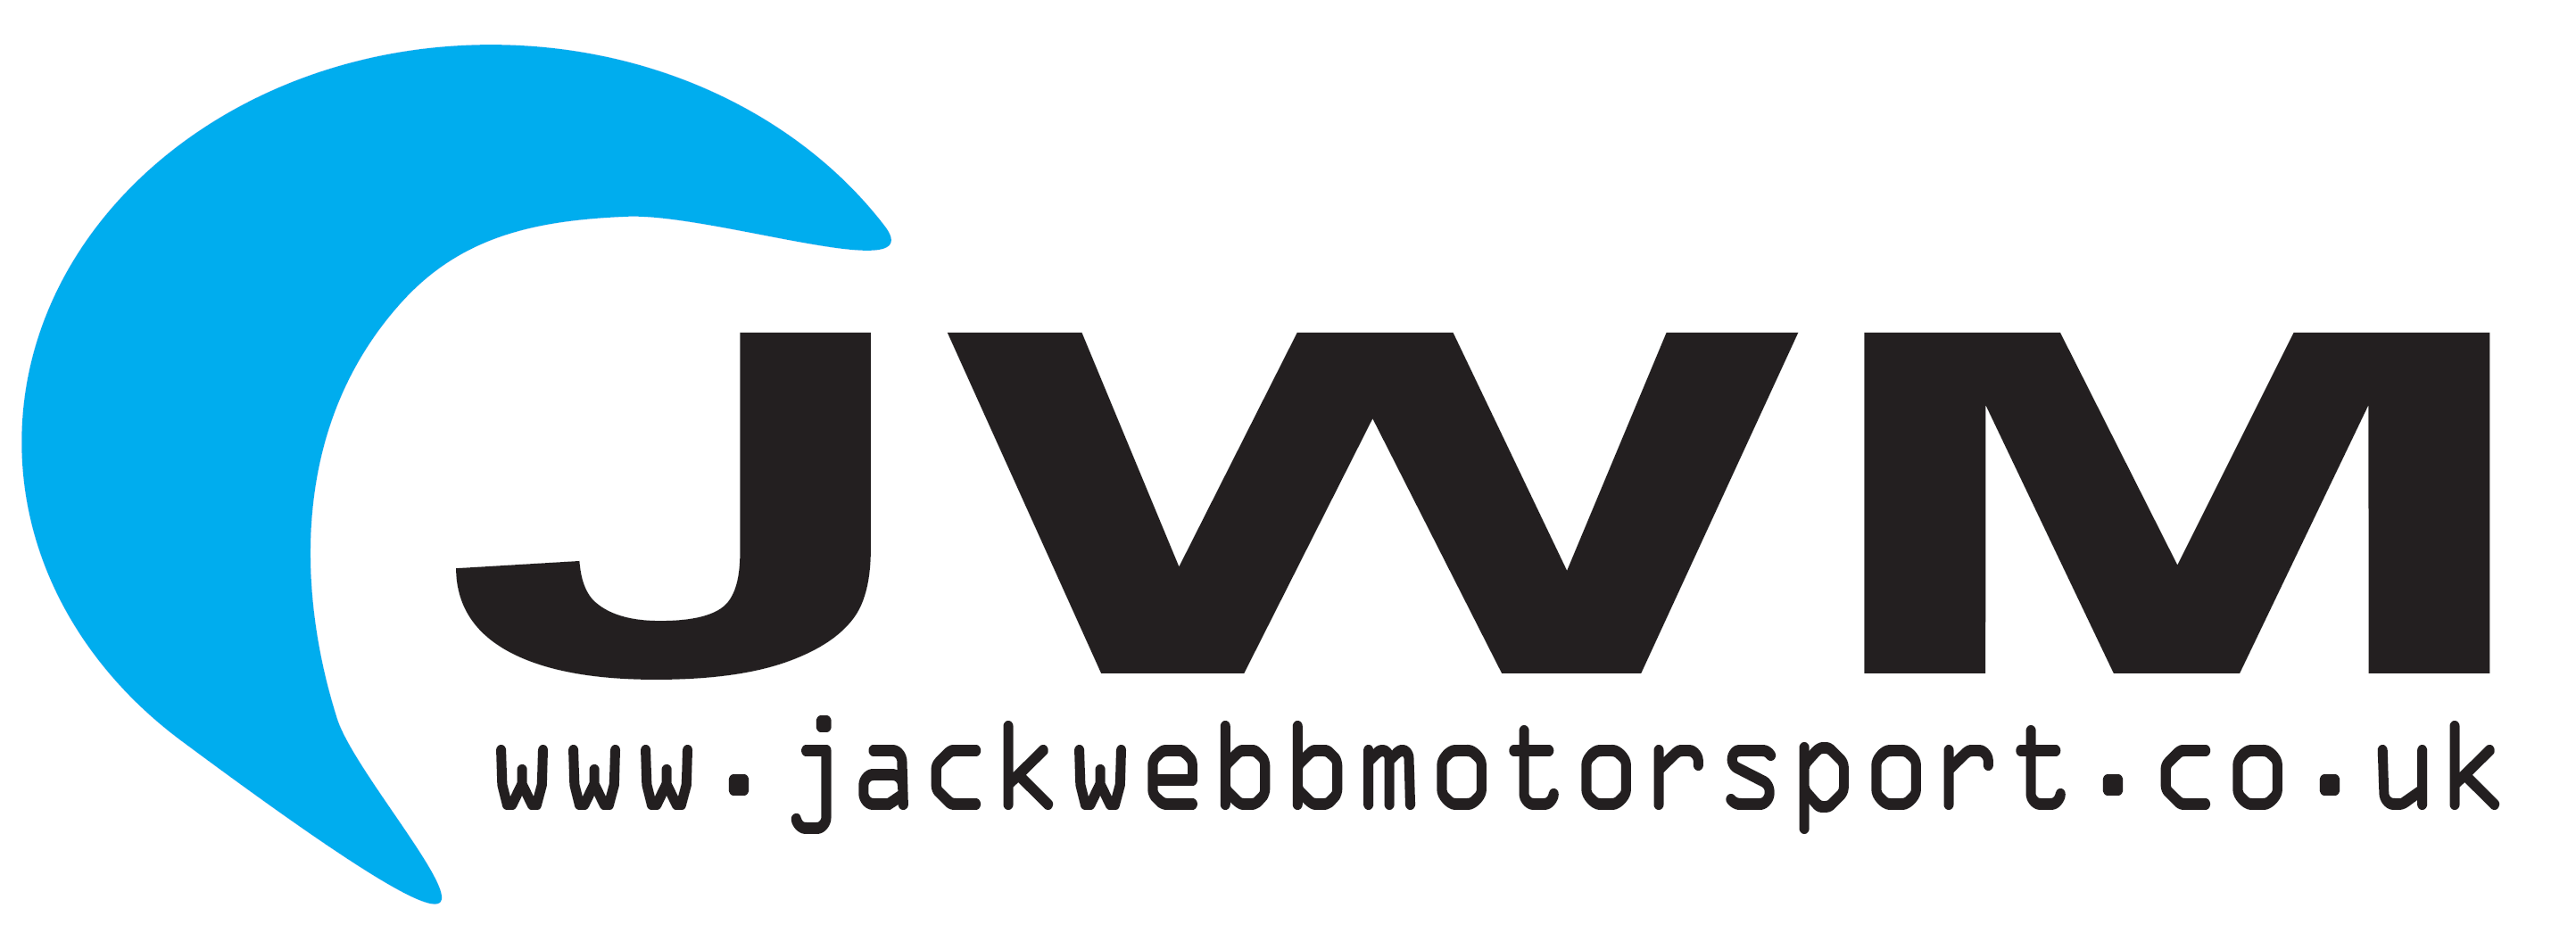 Jack Webb Motorsport Ltd